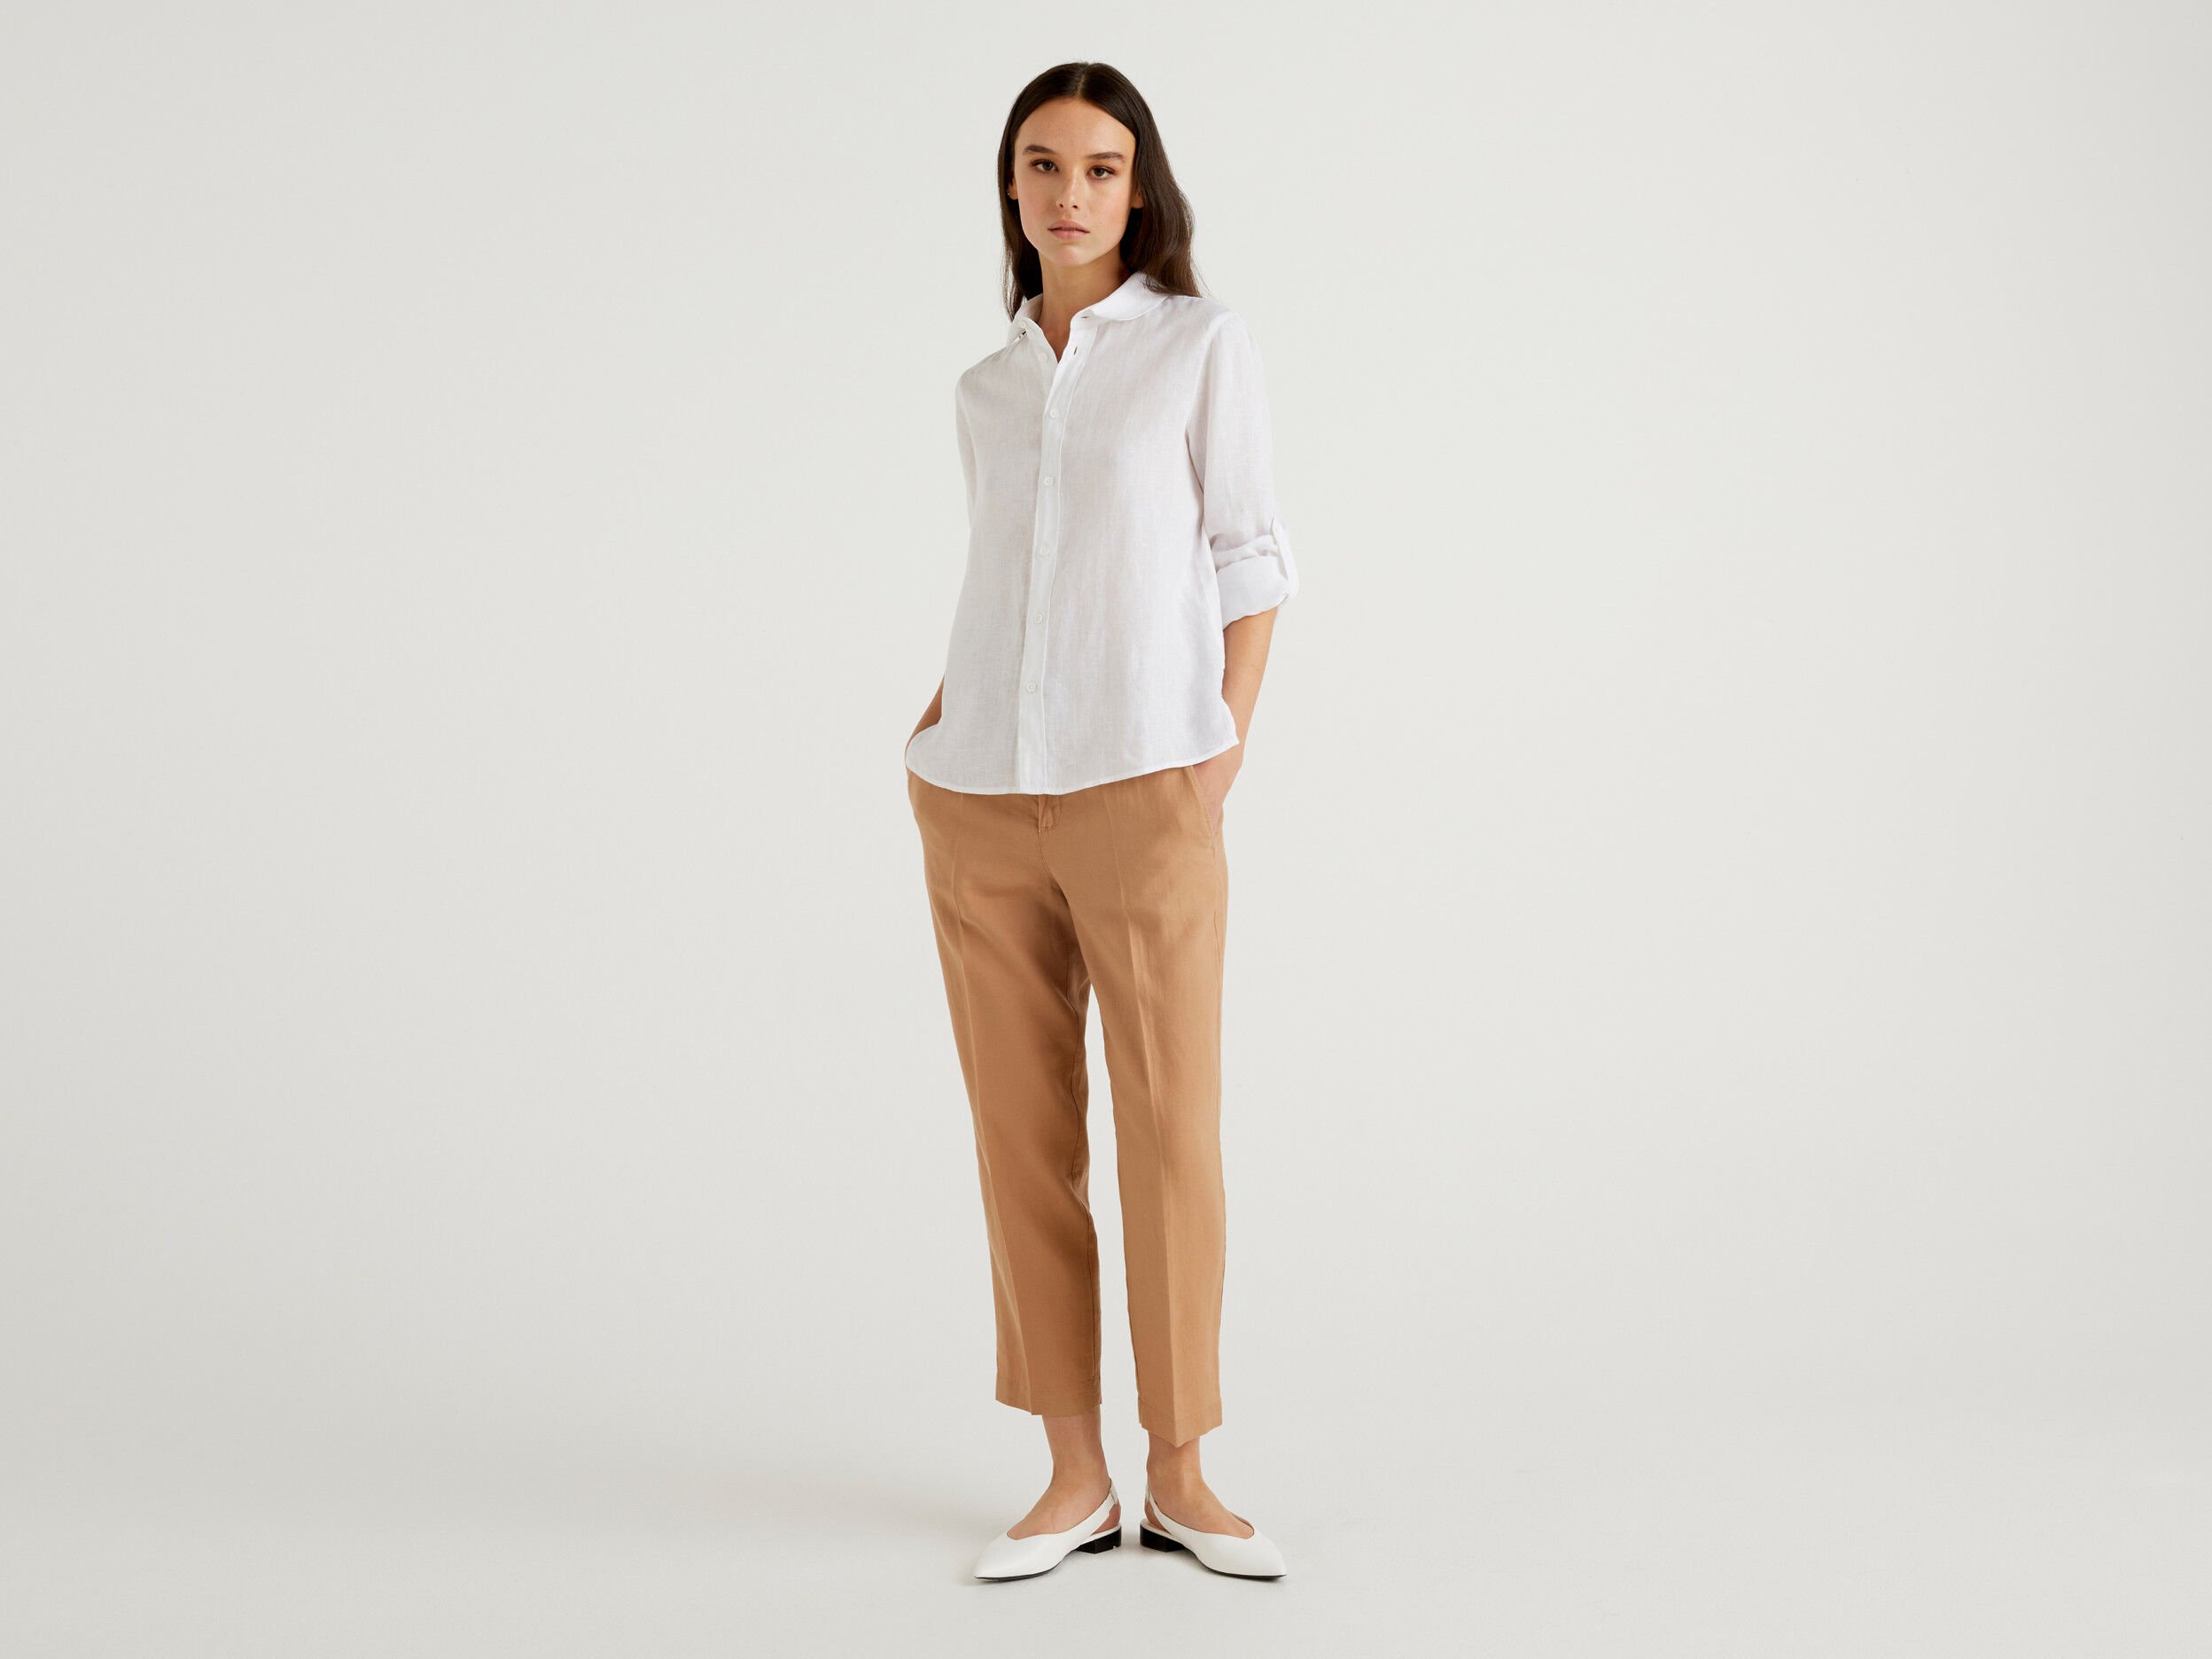 Shop Formal Bottom wears for Women Online | Go Colors